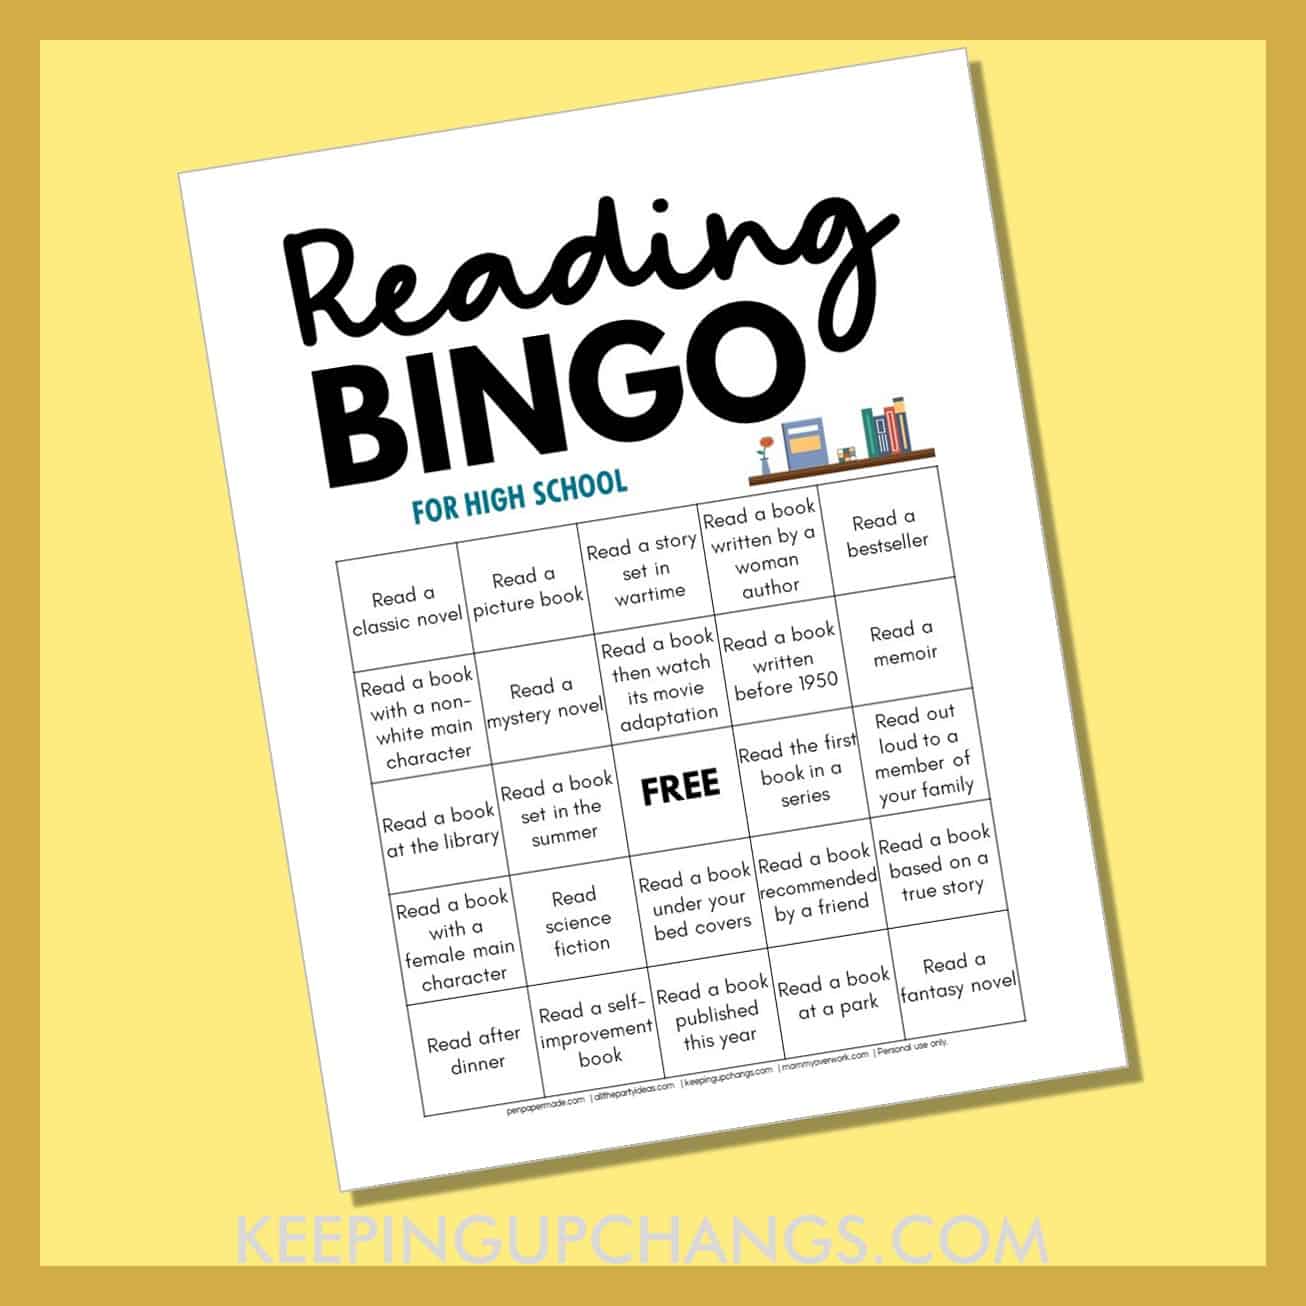 high school reading bingo challenge with fun ways to enjoy reading.